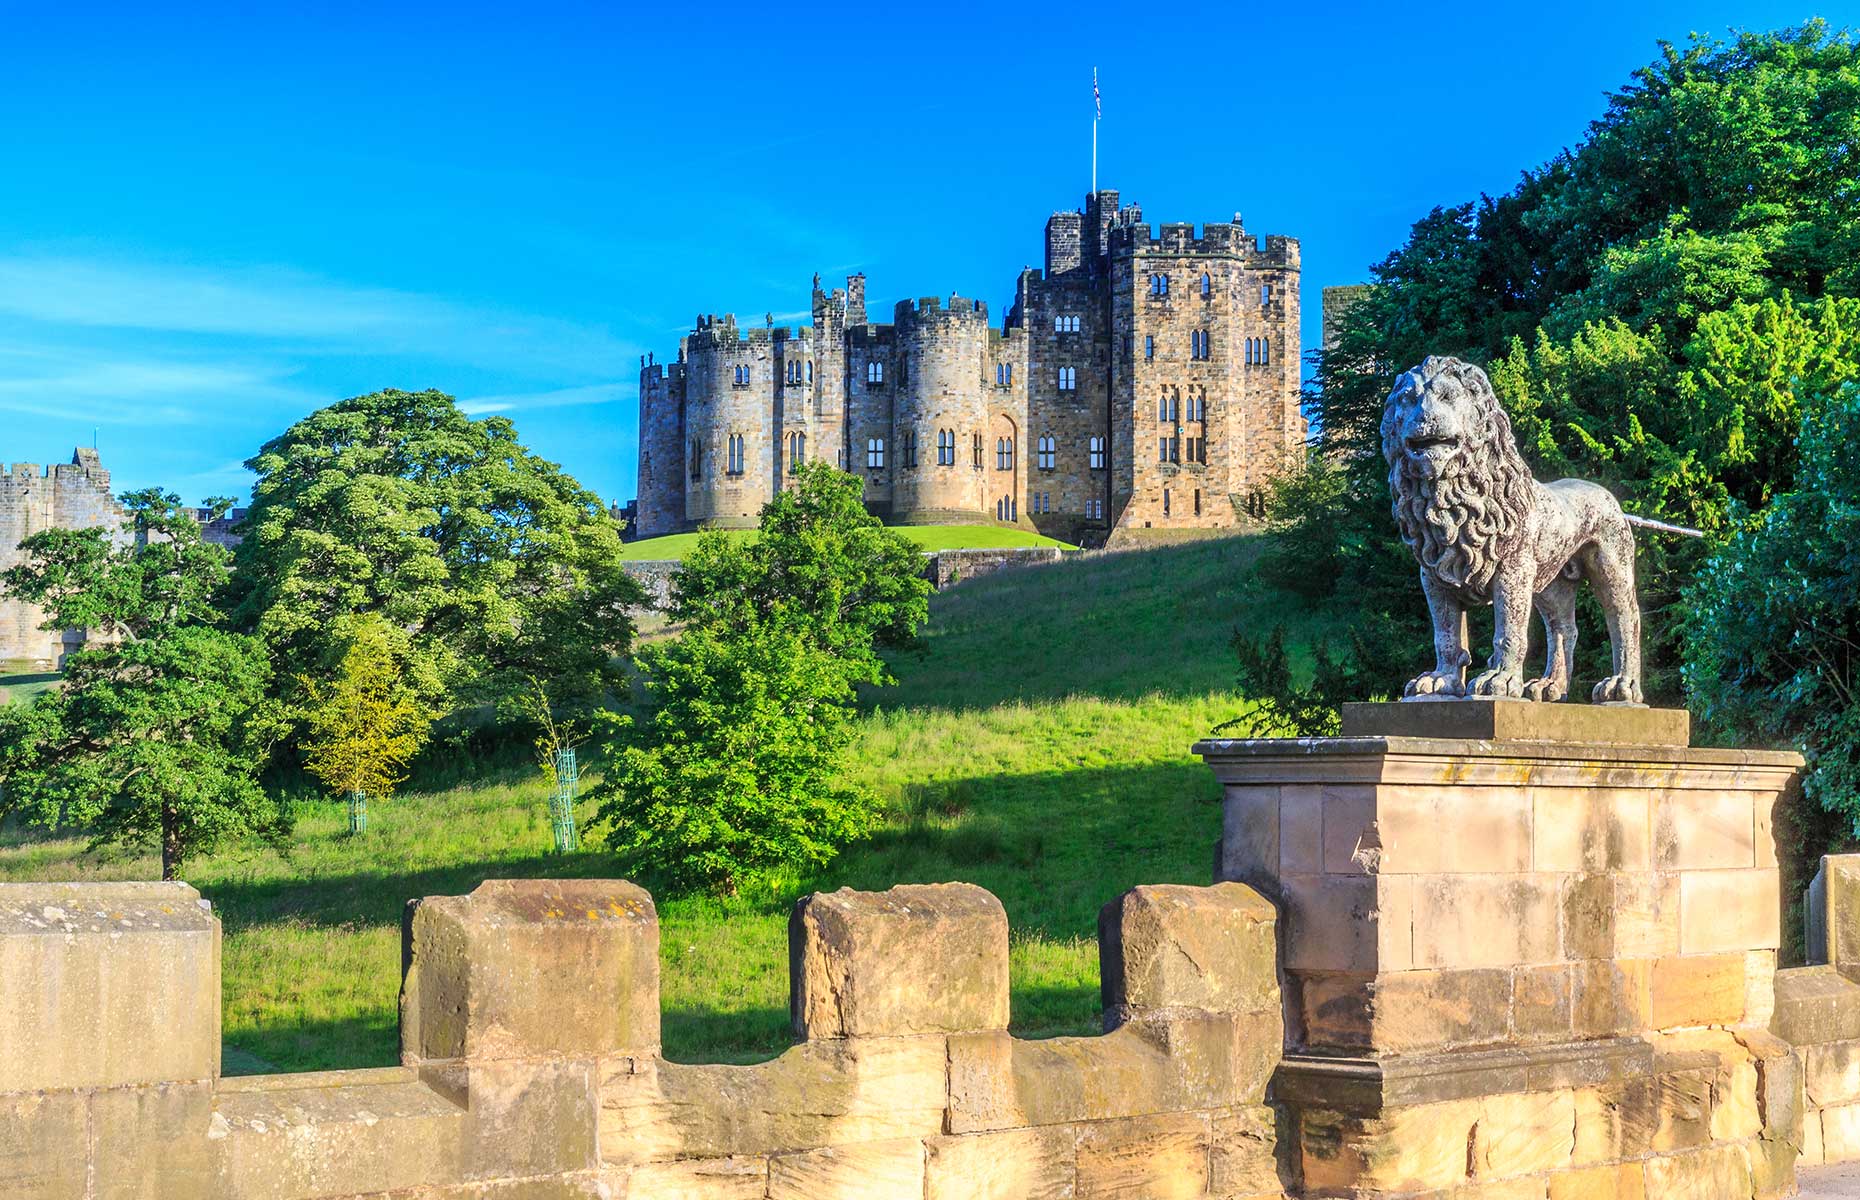 Alnwick Castle aka Hogwarts in Northumberland England (Image: iLongLoveKing/Shutterstock)